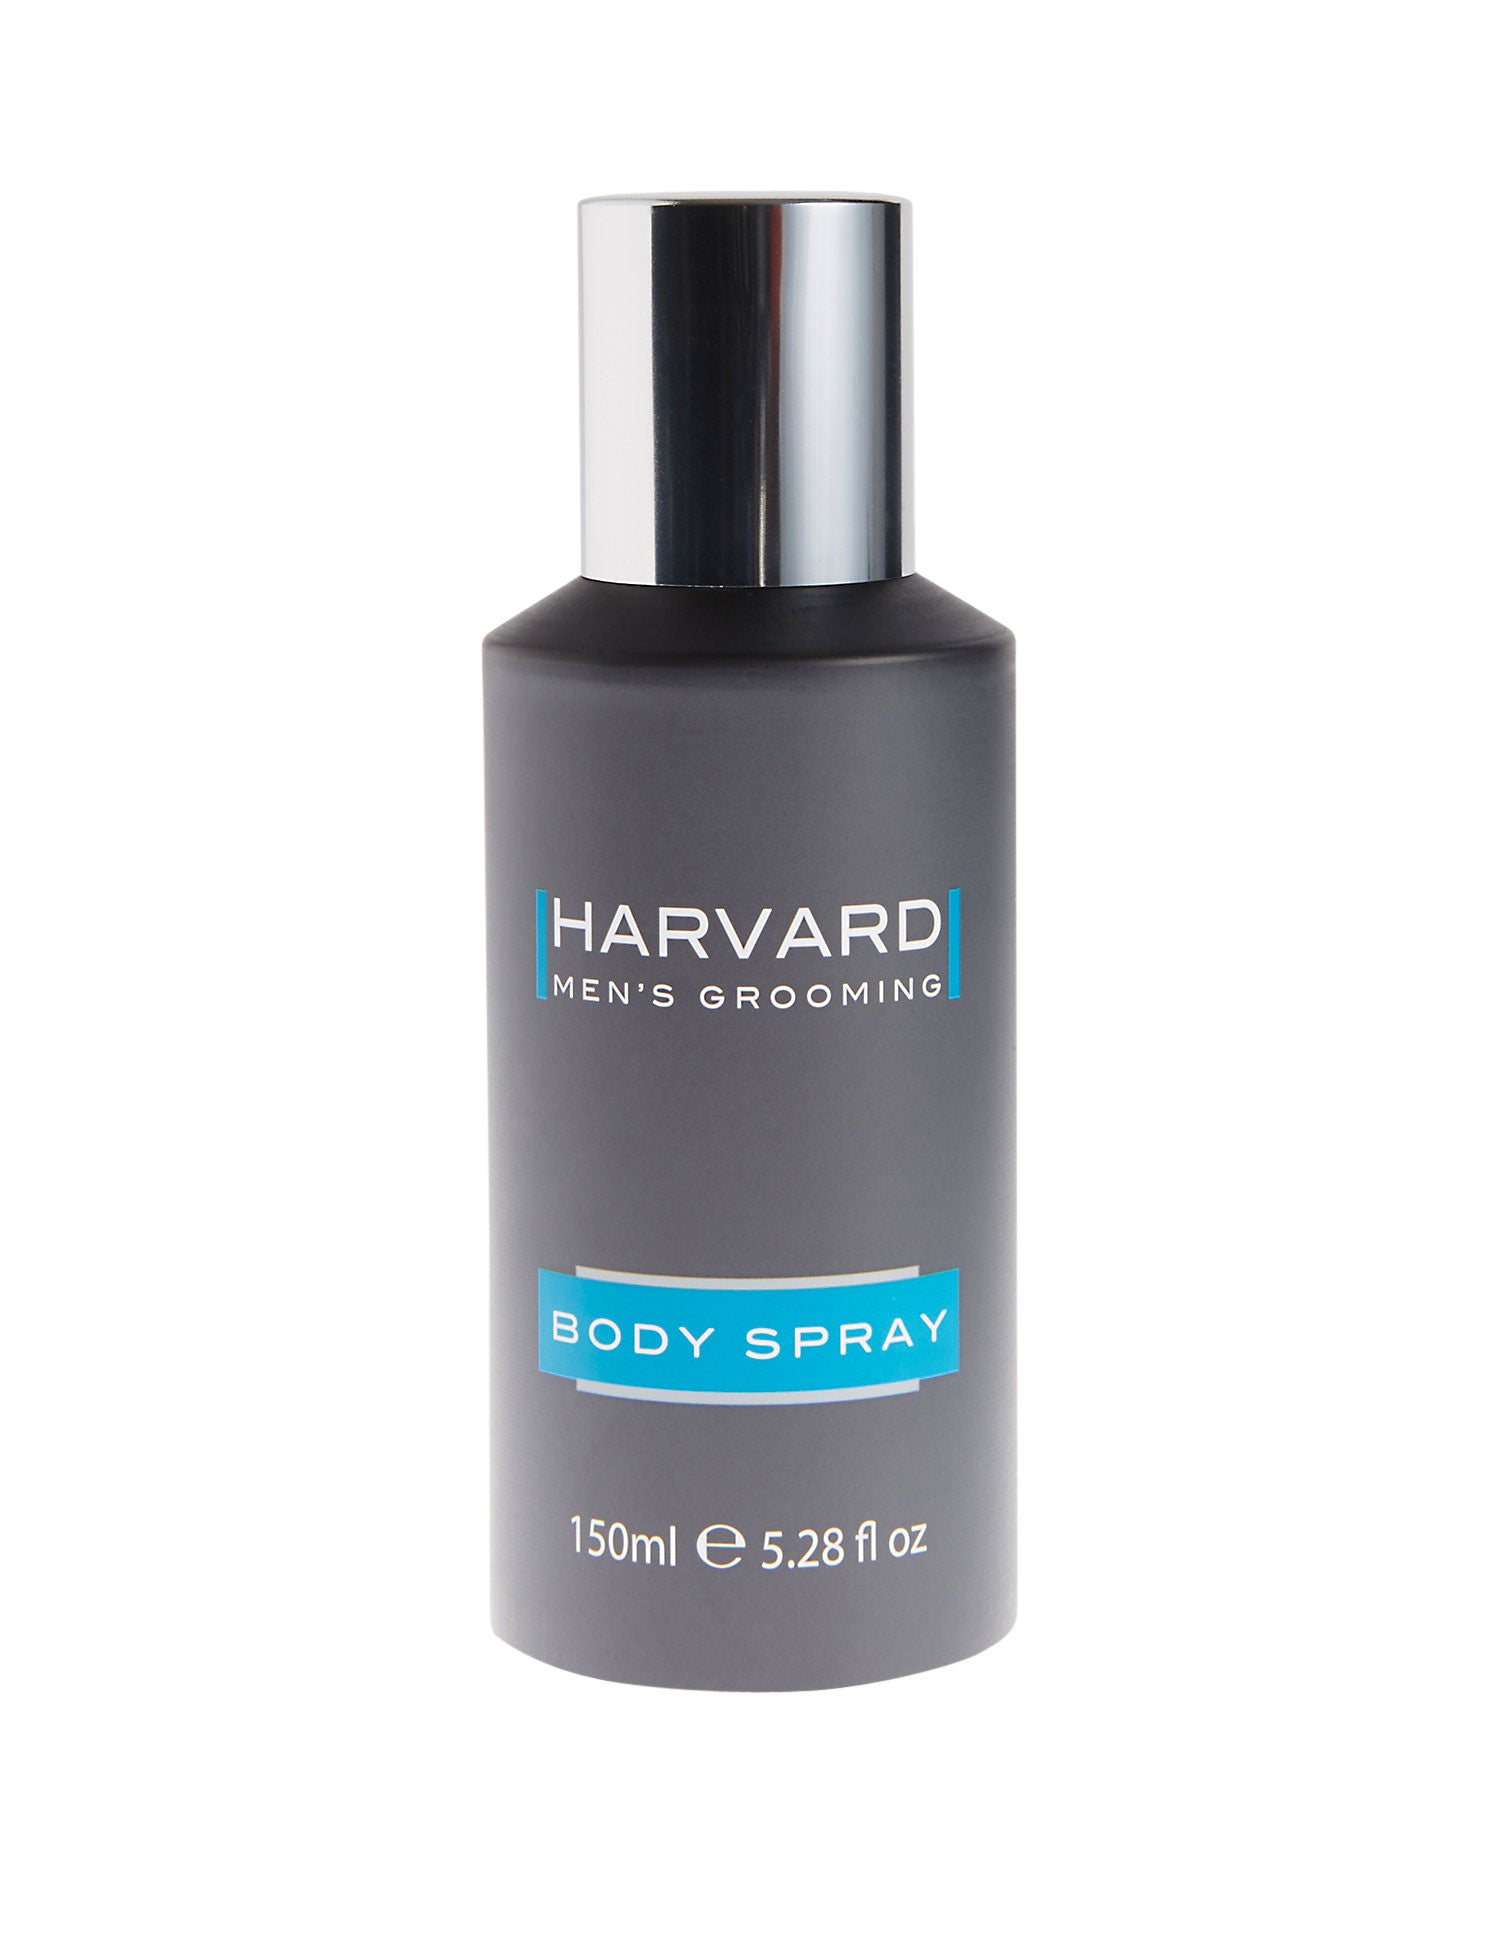 Harvard Body Spray 150ml Marks & Spencer Philippines